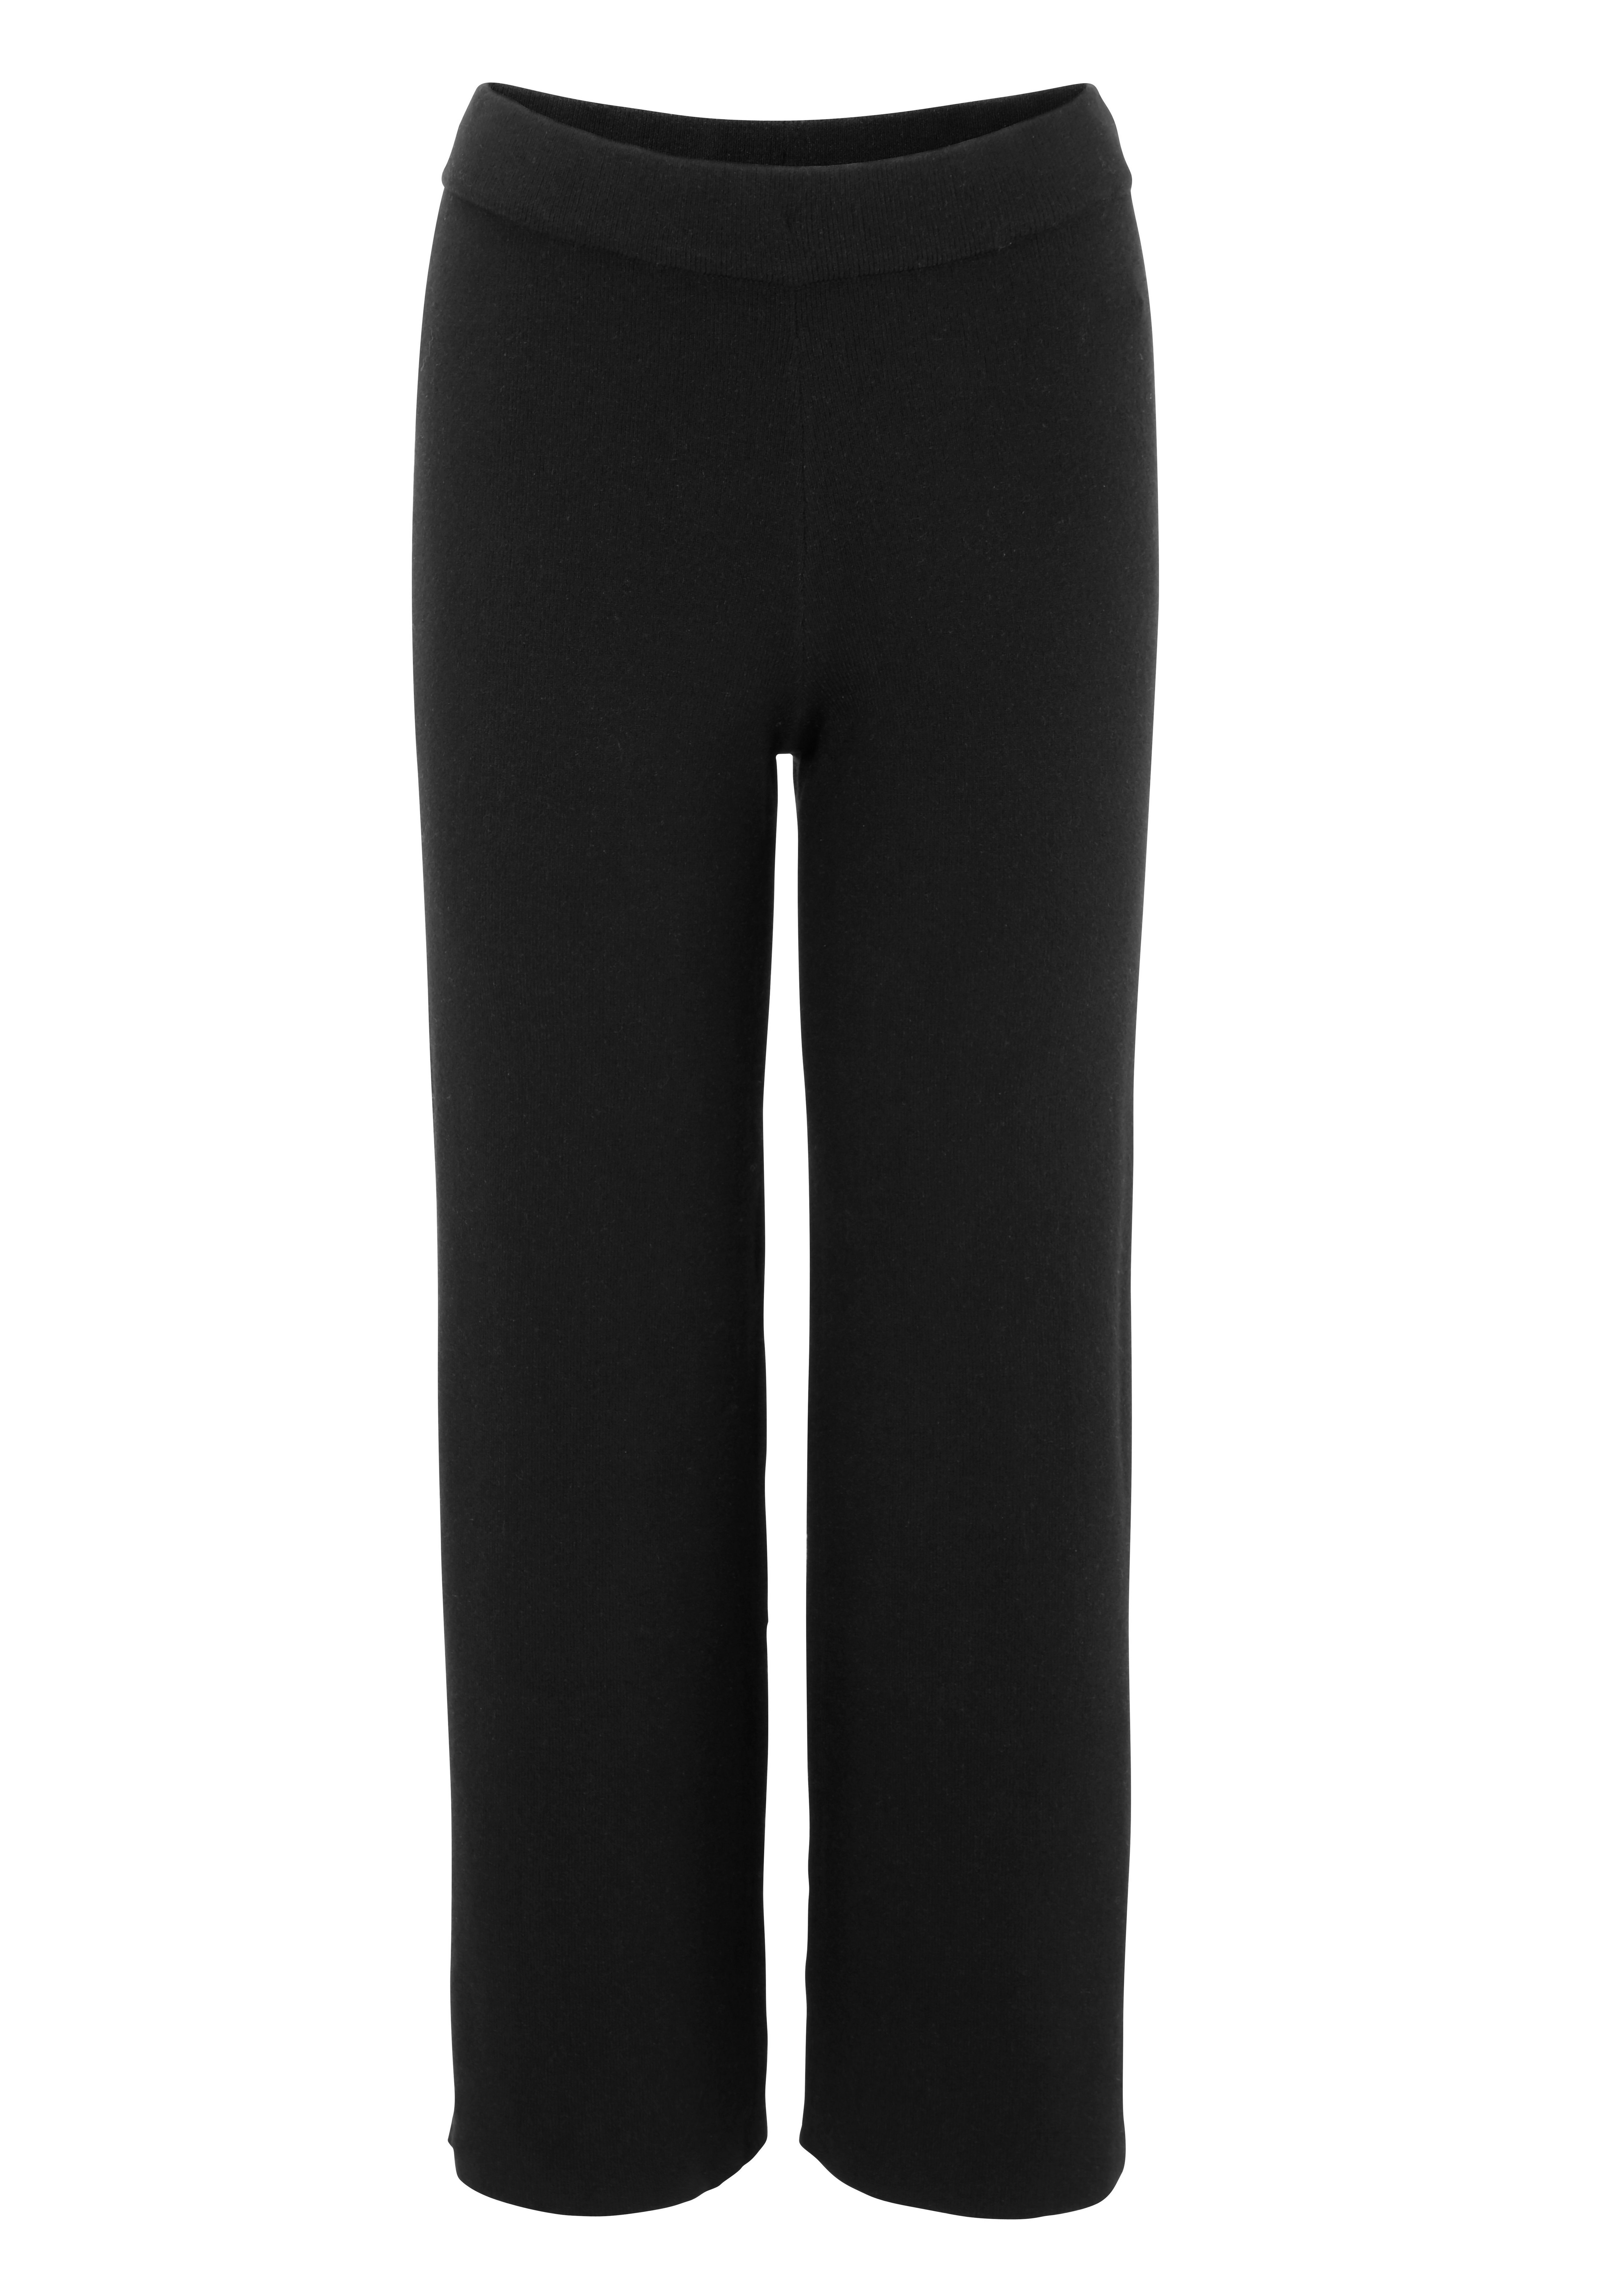 Aniston CASUAL Strickhose Culotte-Form in schwarz trendiger